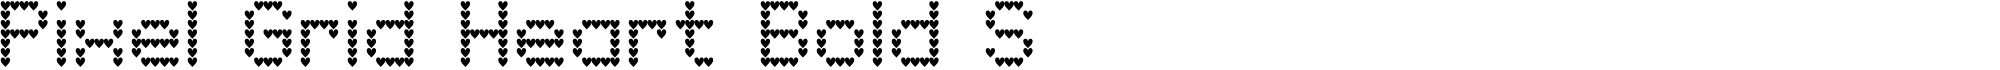 Pixel Grid Heart Bold S image